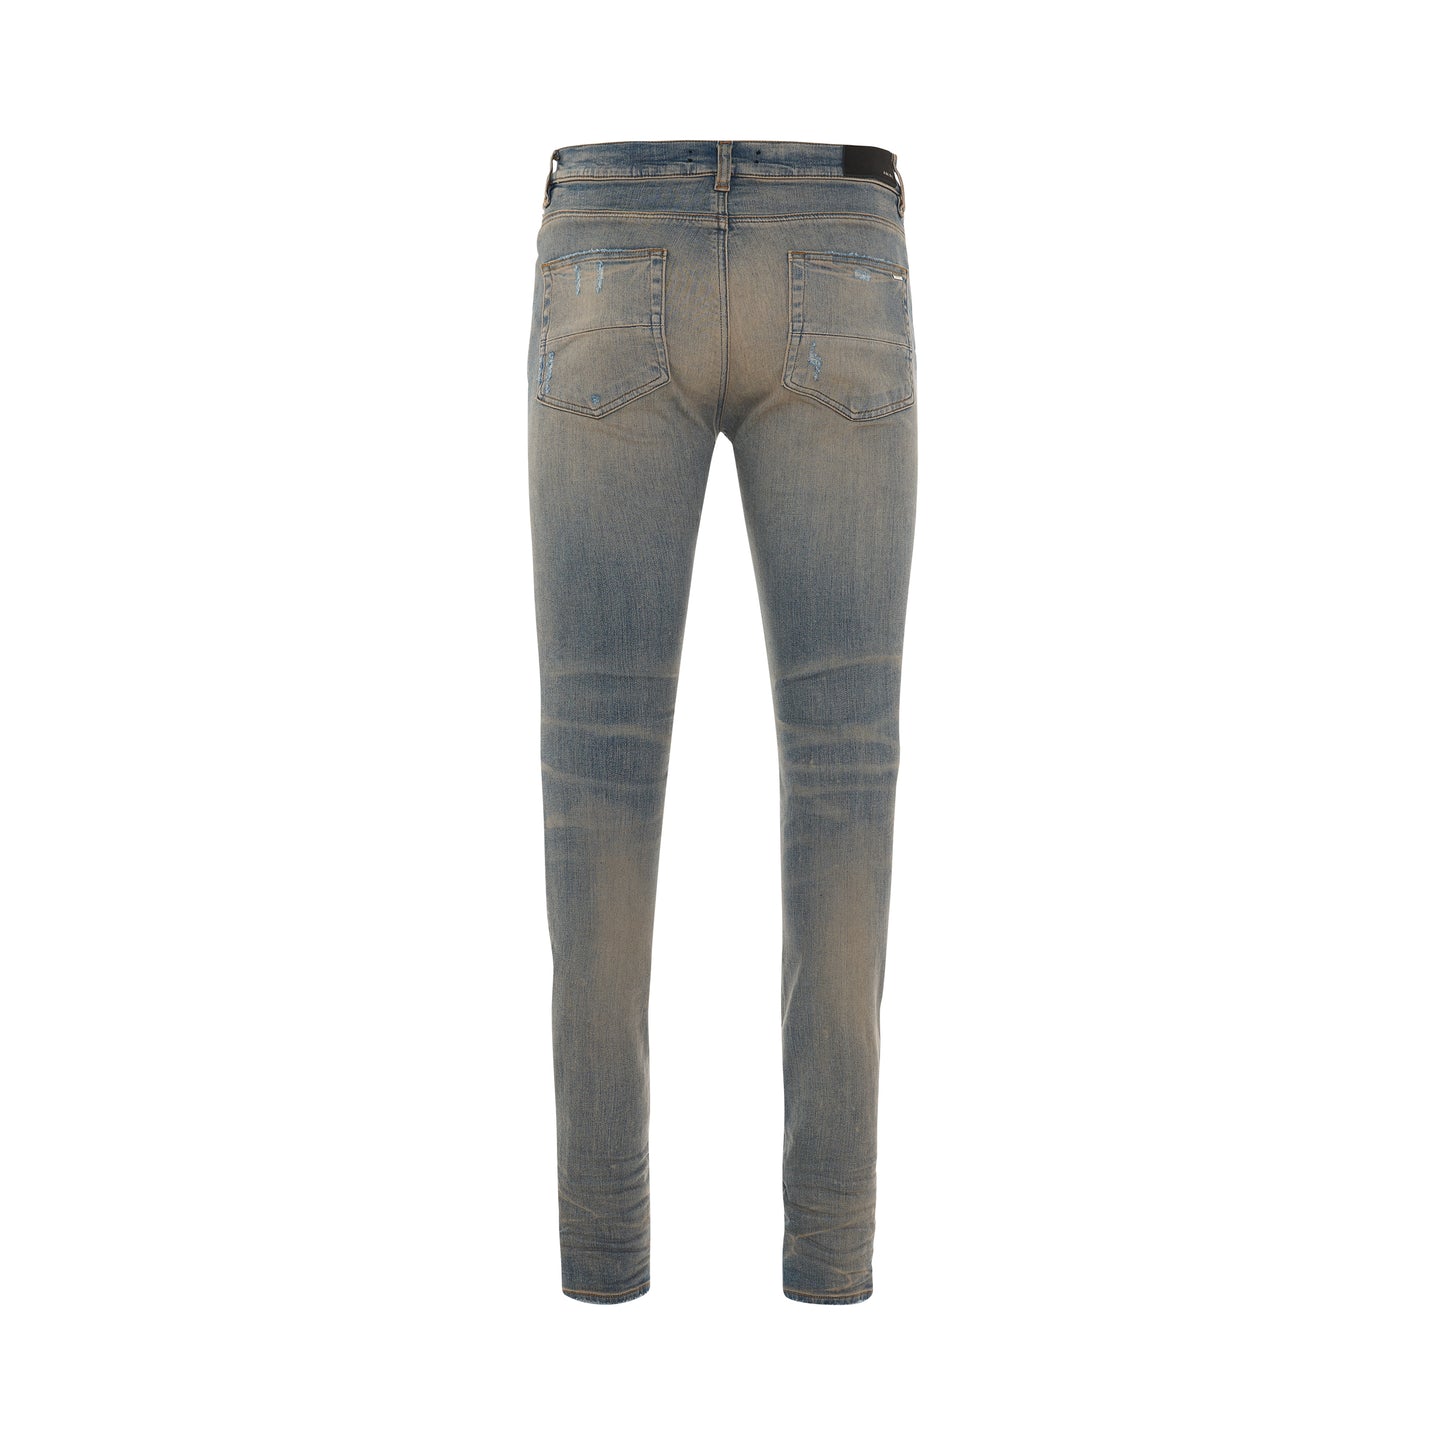 MX1 Jeans in Clay Indigo